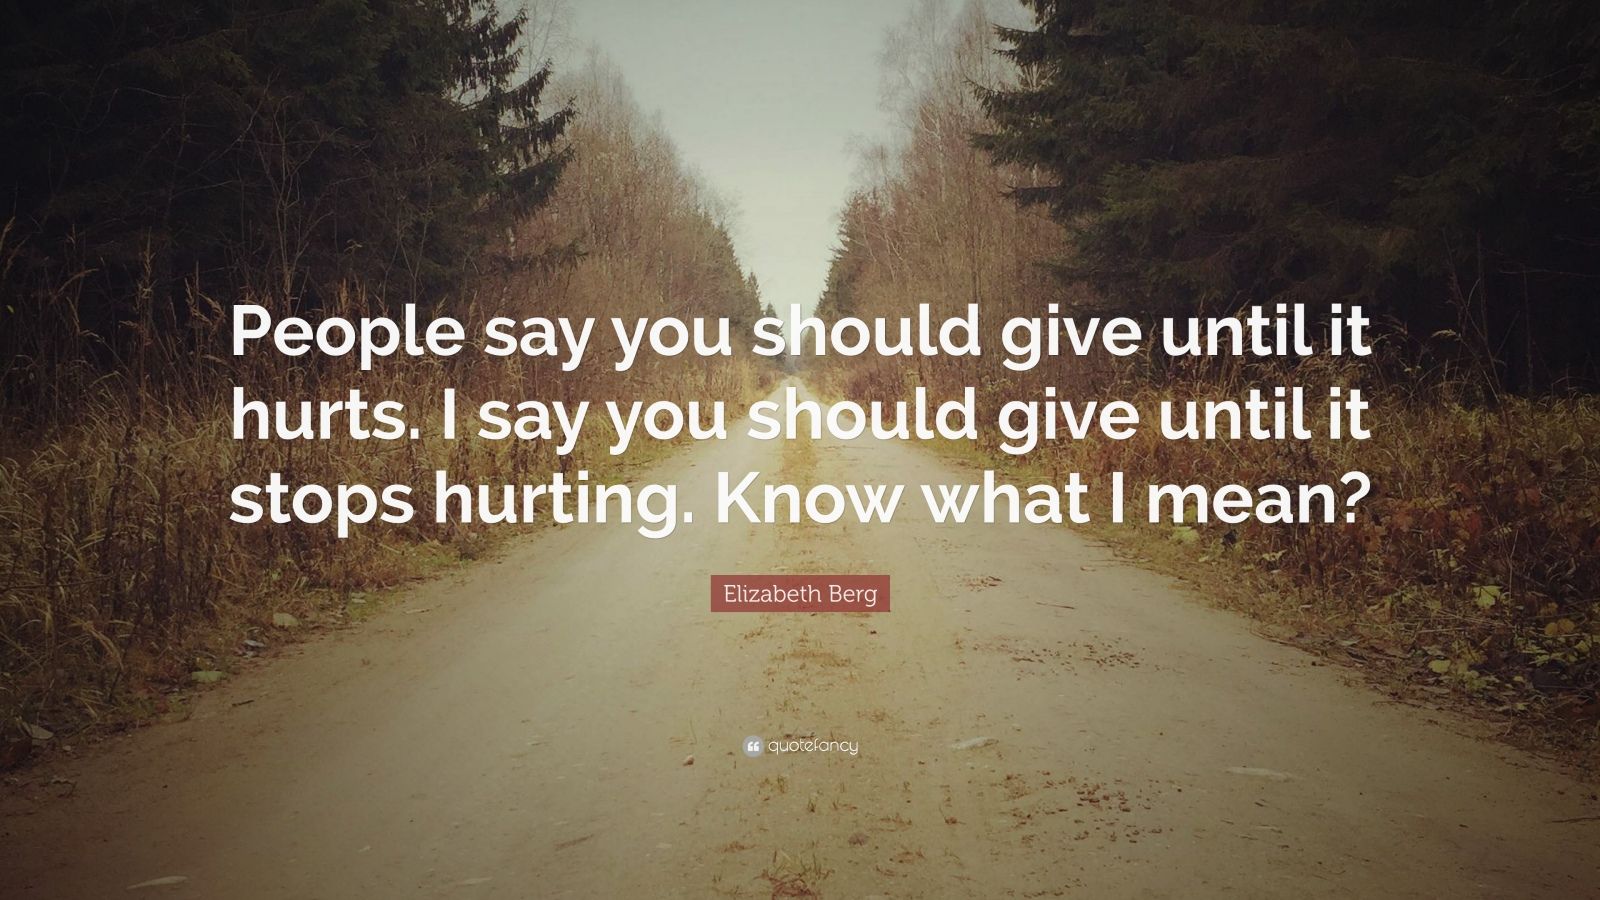 Elizabeth Berg Quote: "People say you should give until it hurts. I say you should give until it ...